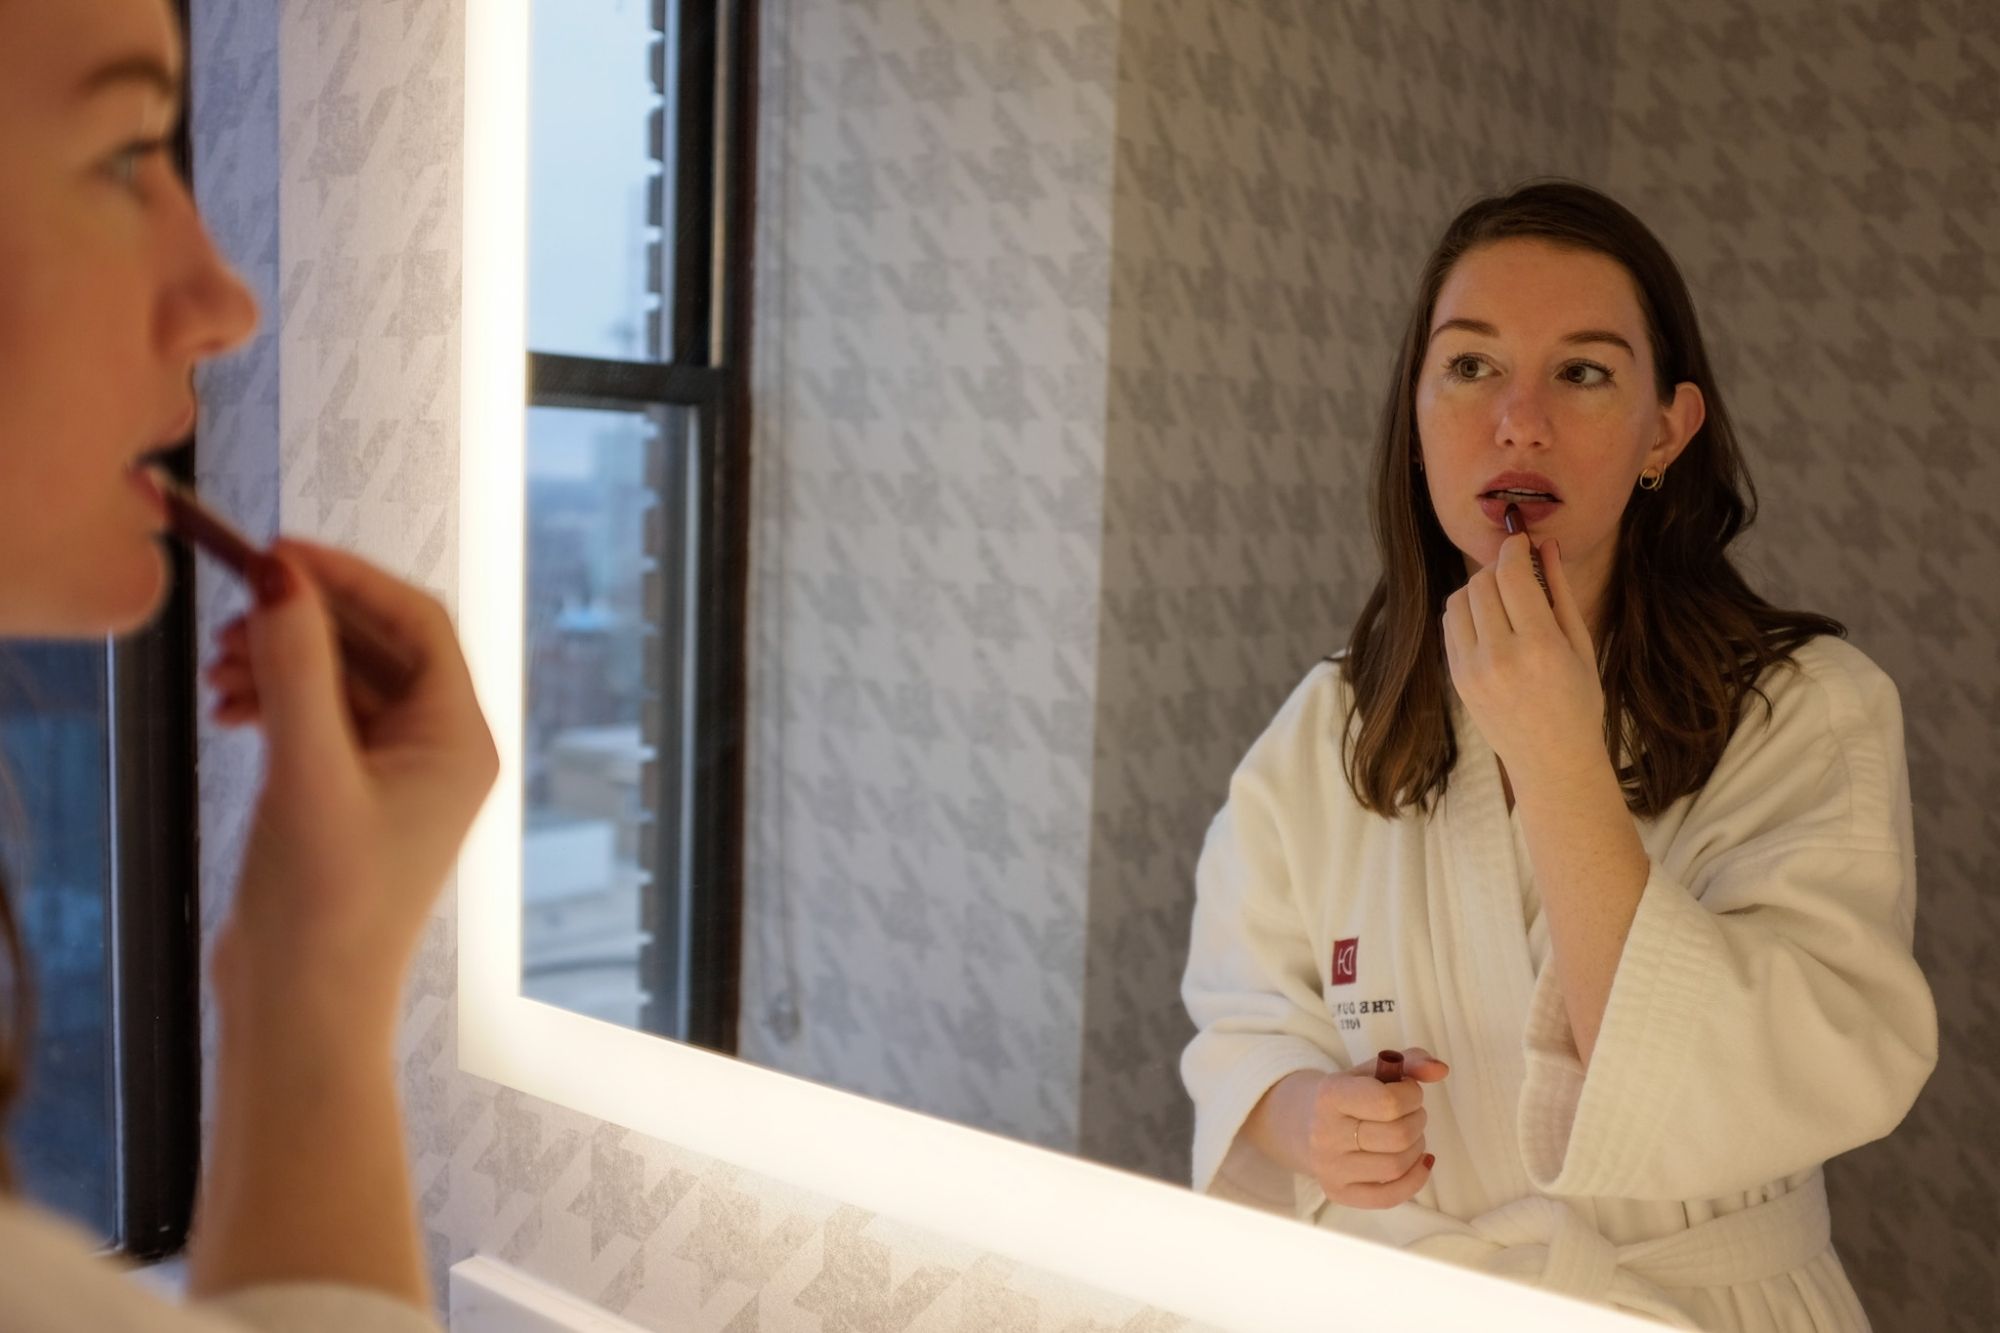 Alyssa applies lipstick while wearing the hotel robe